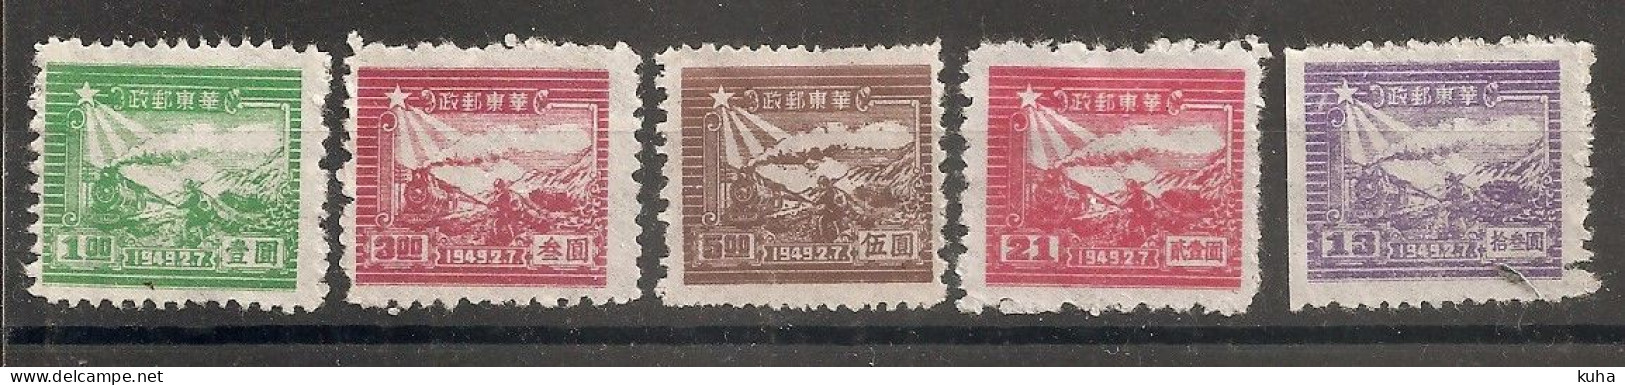 China Chine 1949 North China  MH & MNH - Northern China 1949-50